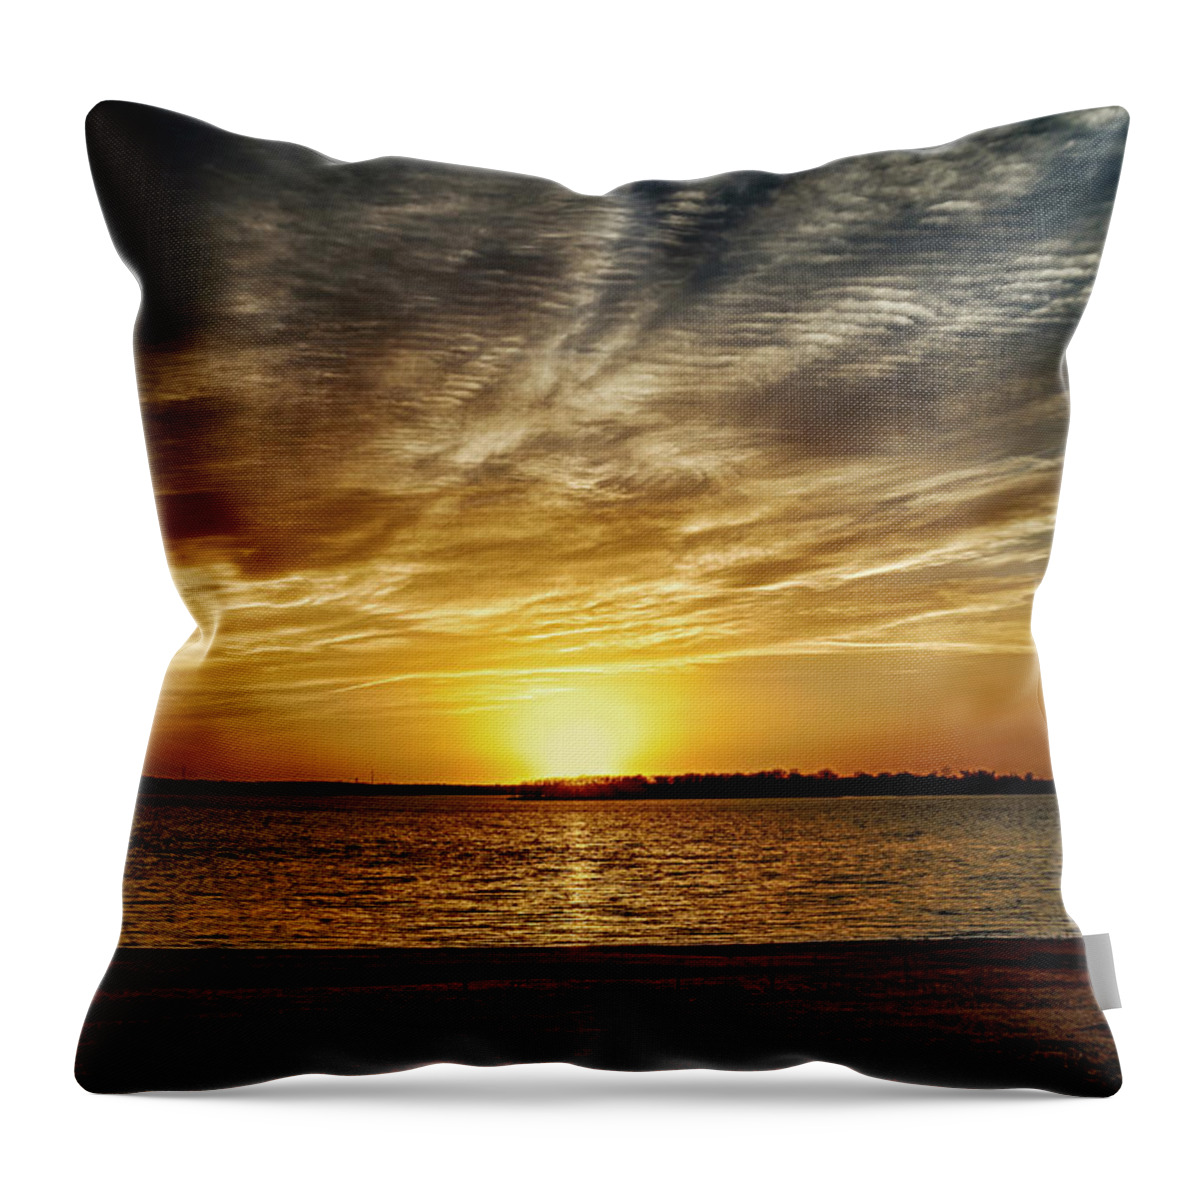 Horizontal Throw Pillow featuring the photograph Dramatic Sunset by Doug Long